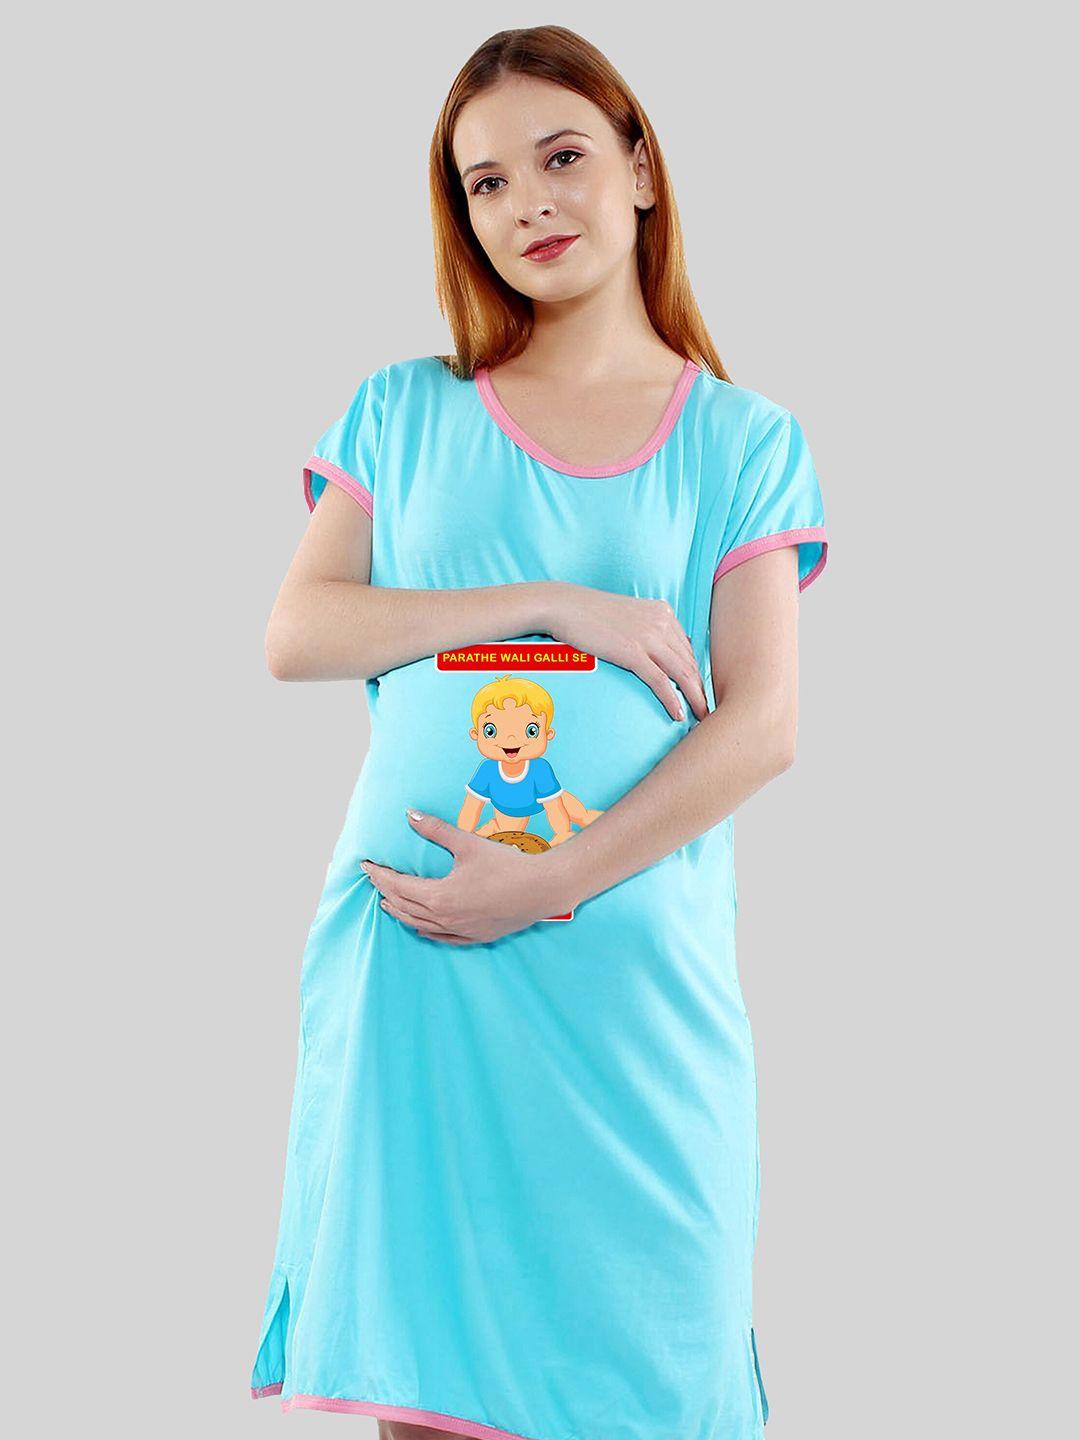 sillyboom conversational printed cotton maternity t-shirt dress